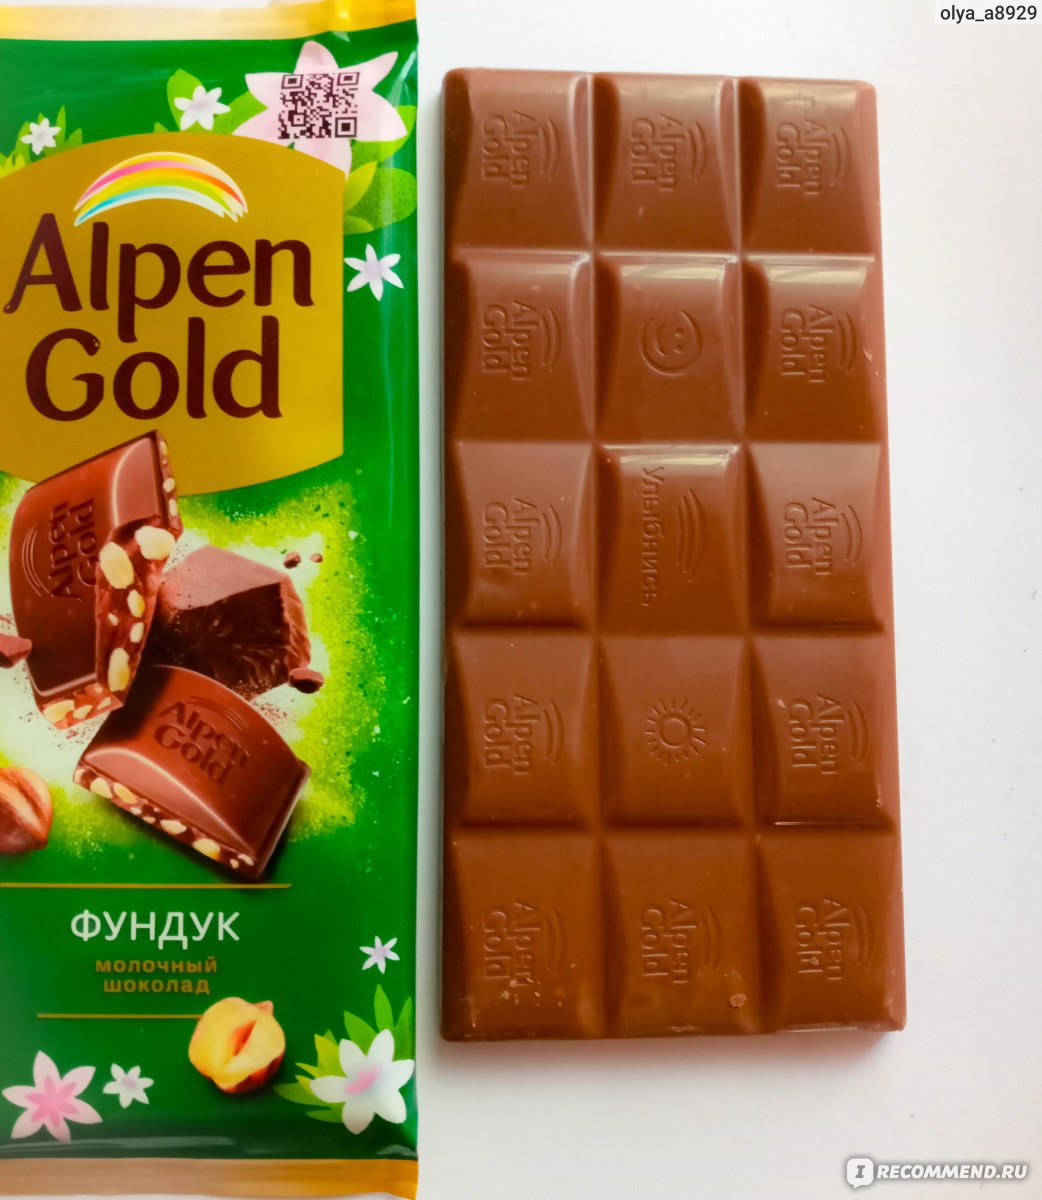 Alpen Gold шоколад 2013